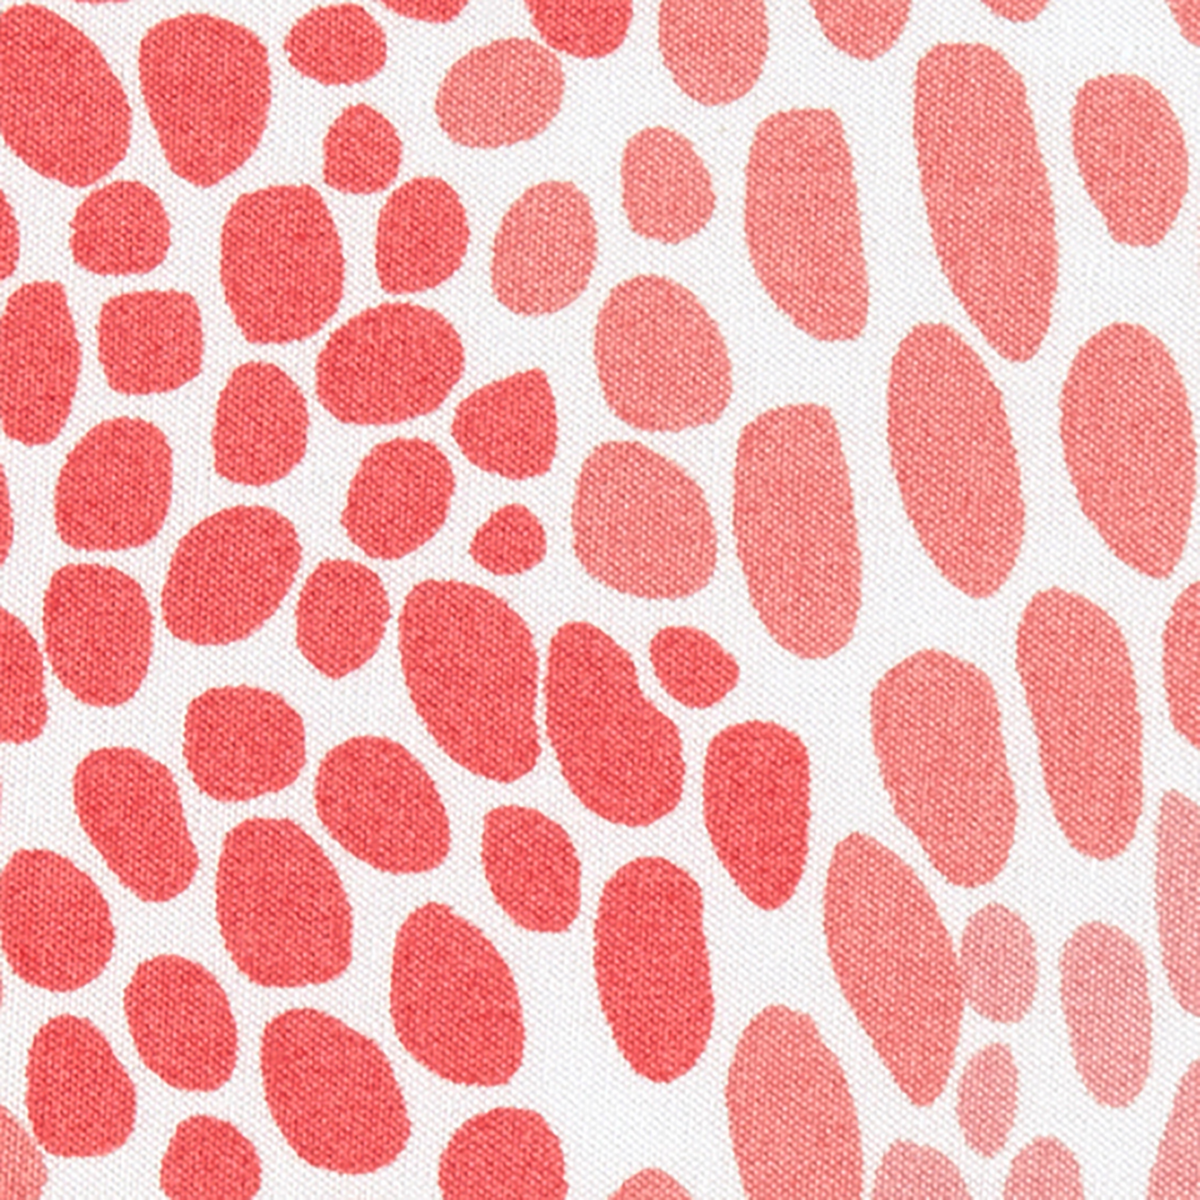 Fabric Closeup of Lulu DK Matouk Nikita Bedding in Coral Color